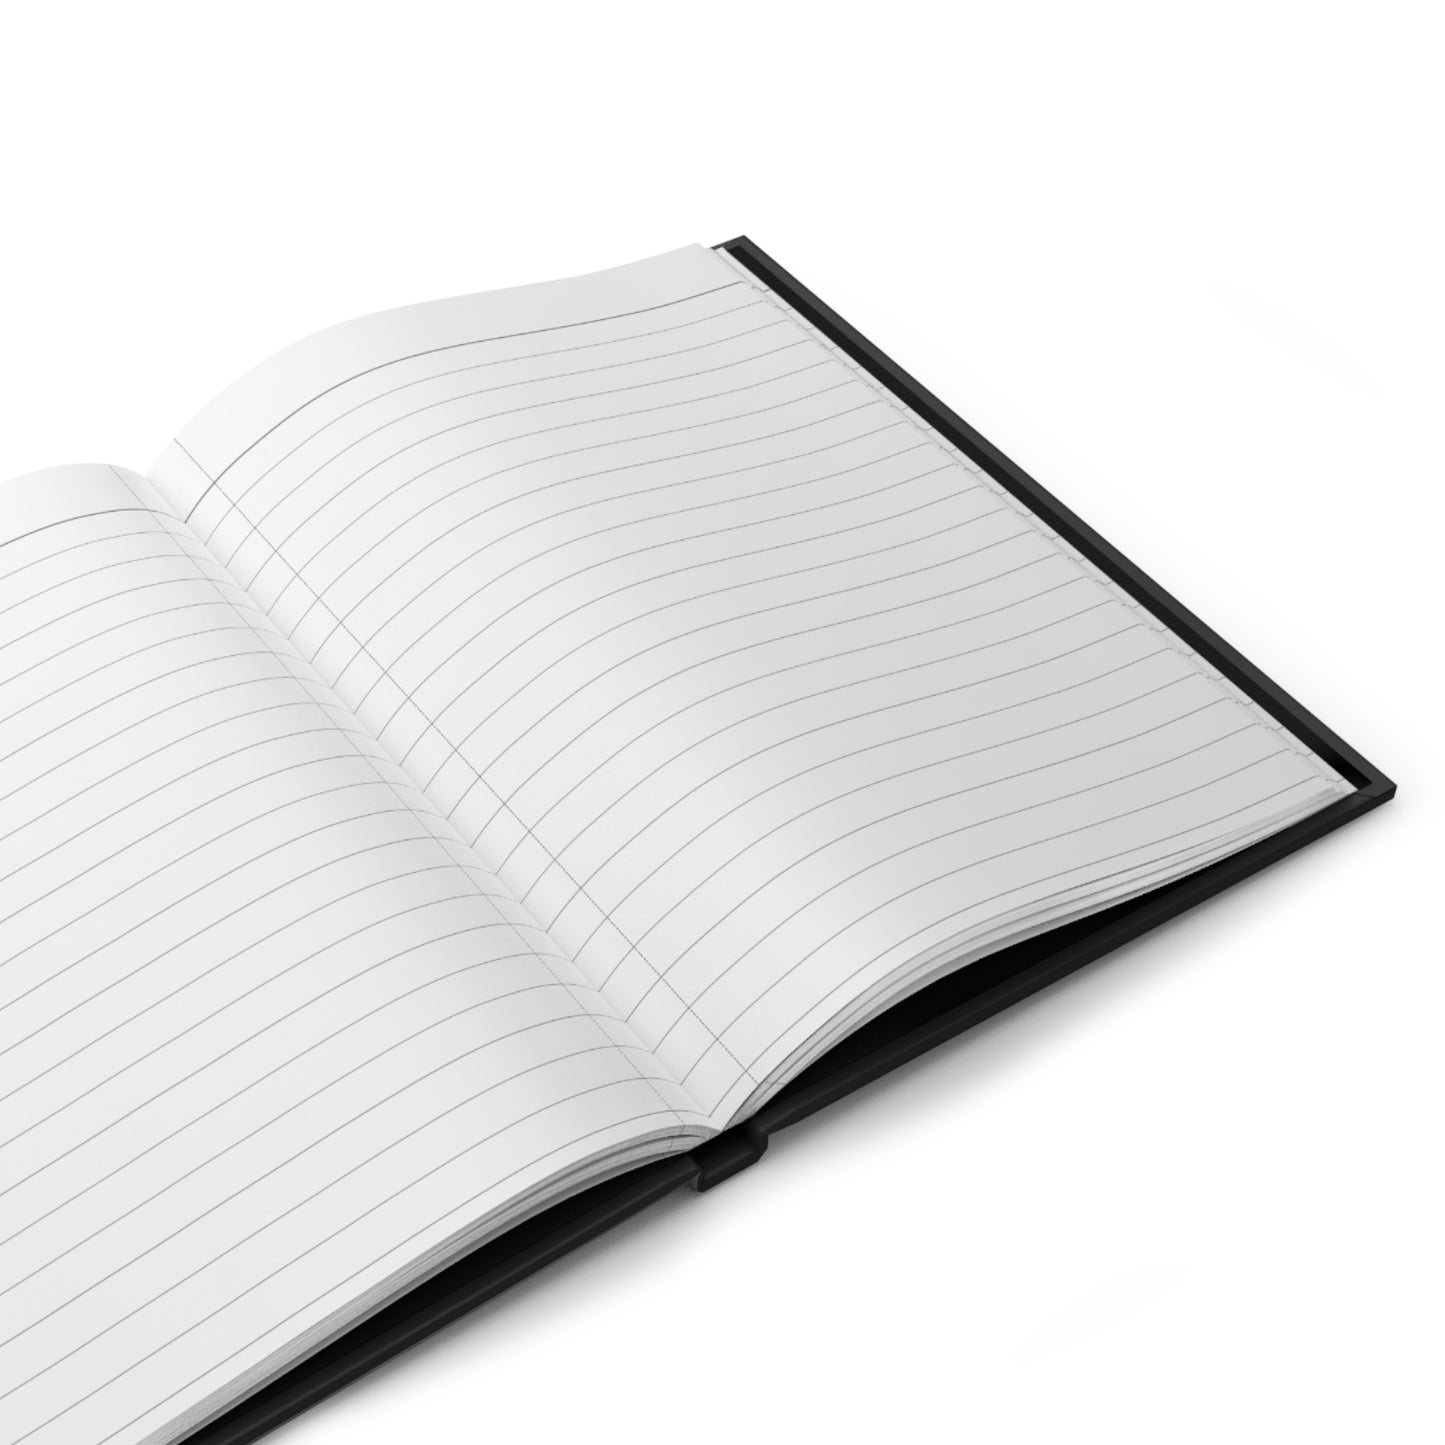 Creative Cauldron Notebook - Journal